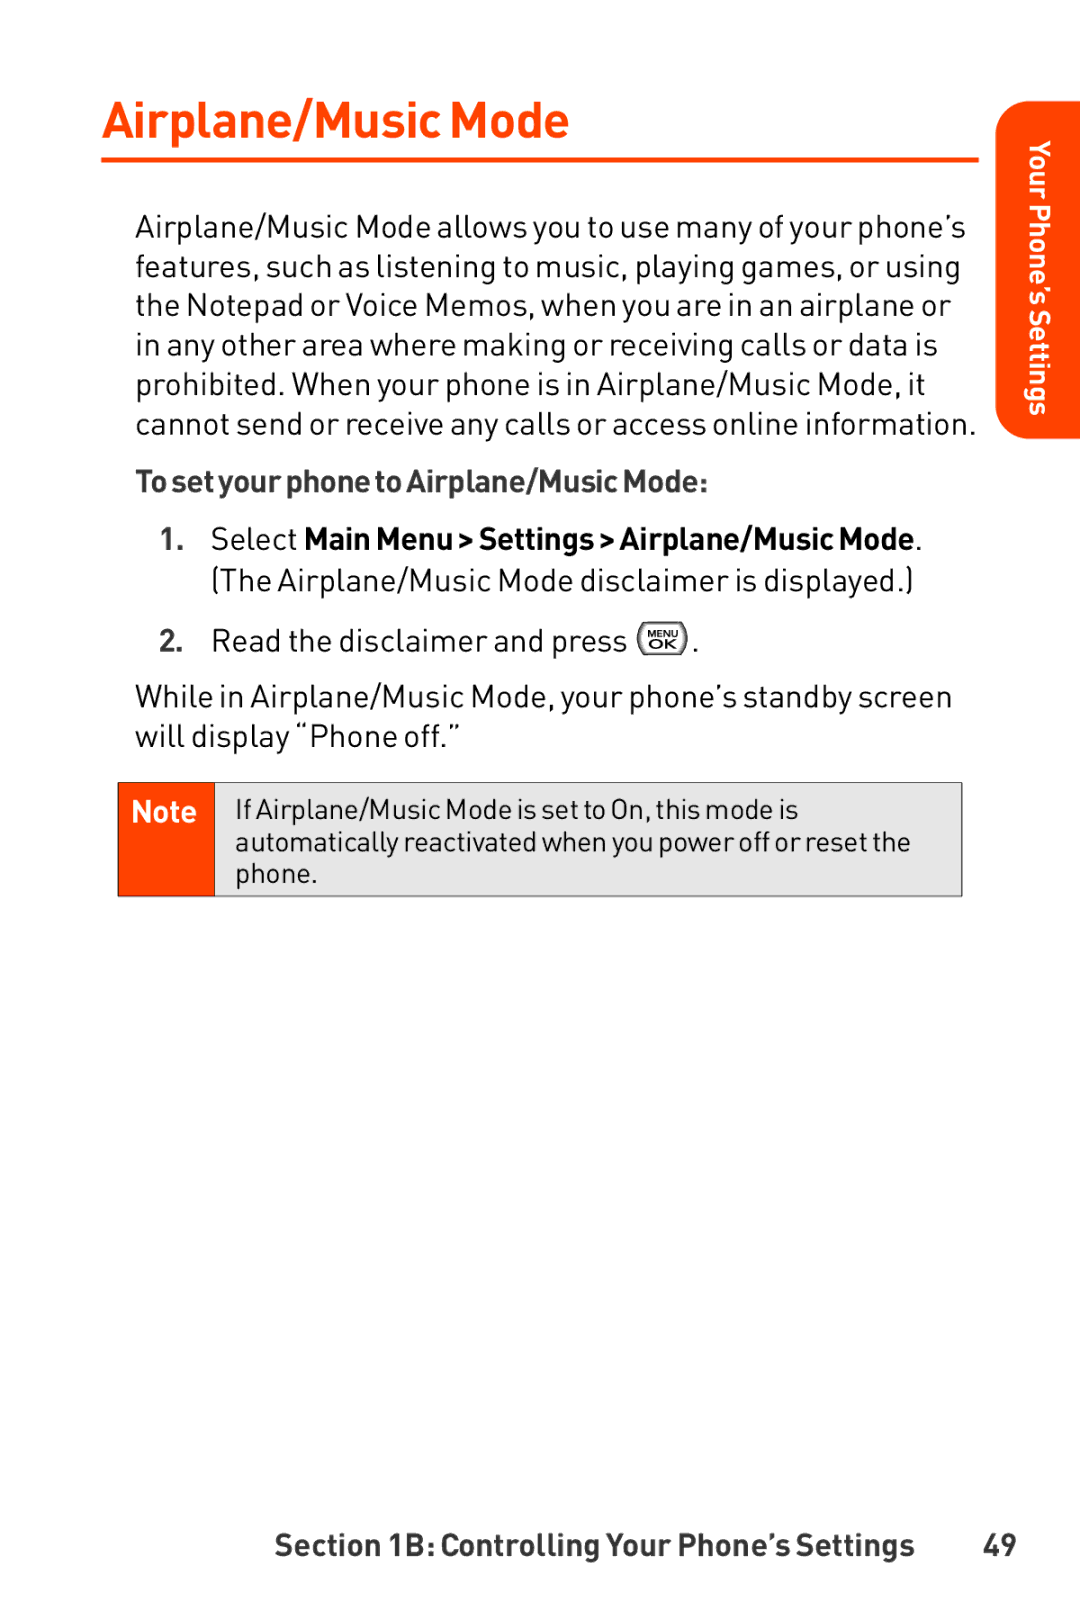 LG Electronics Phone manual Airplane/Music Mode, TosetyourphonetoAirplane/MusicMode 